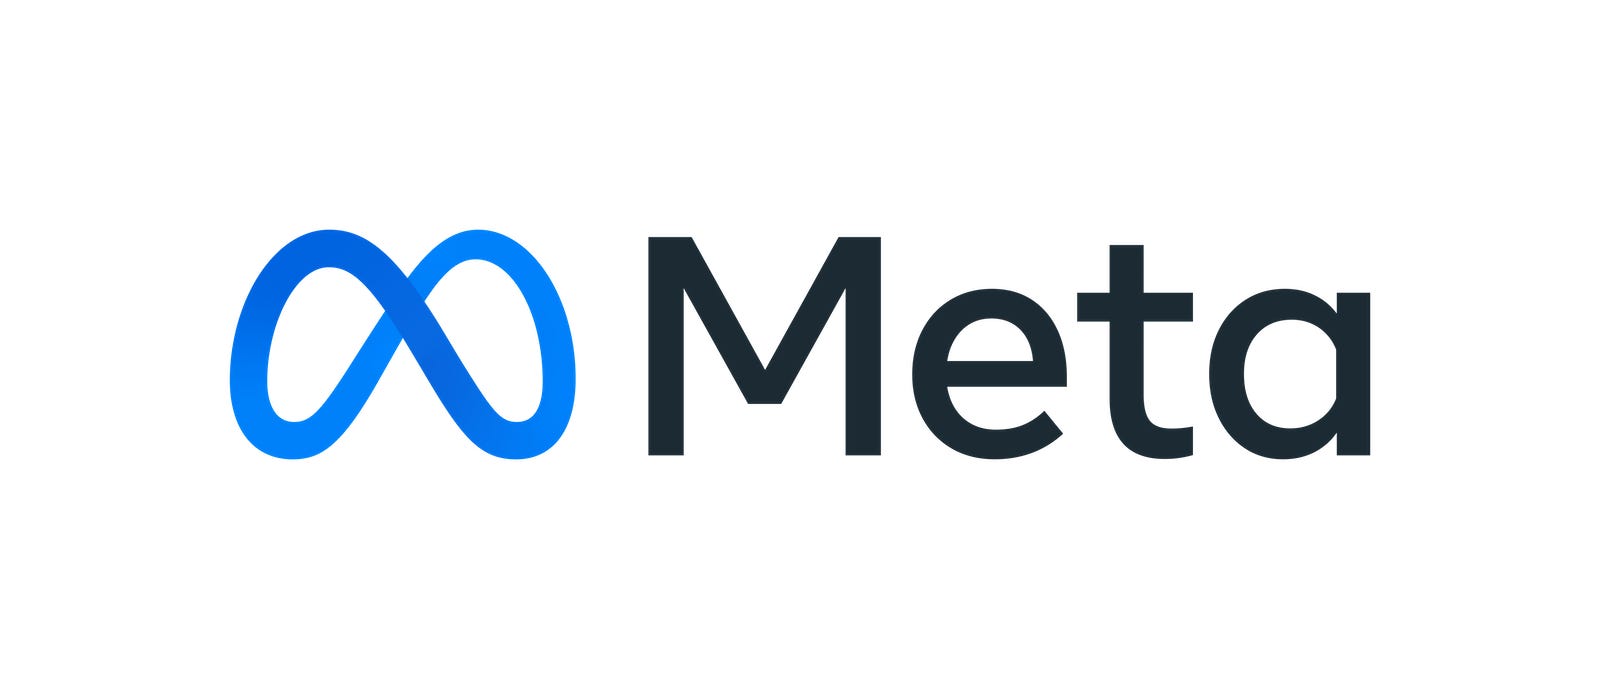 Facebook cambia nome in Meta